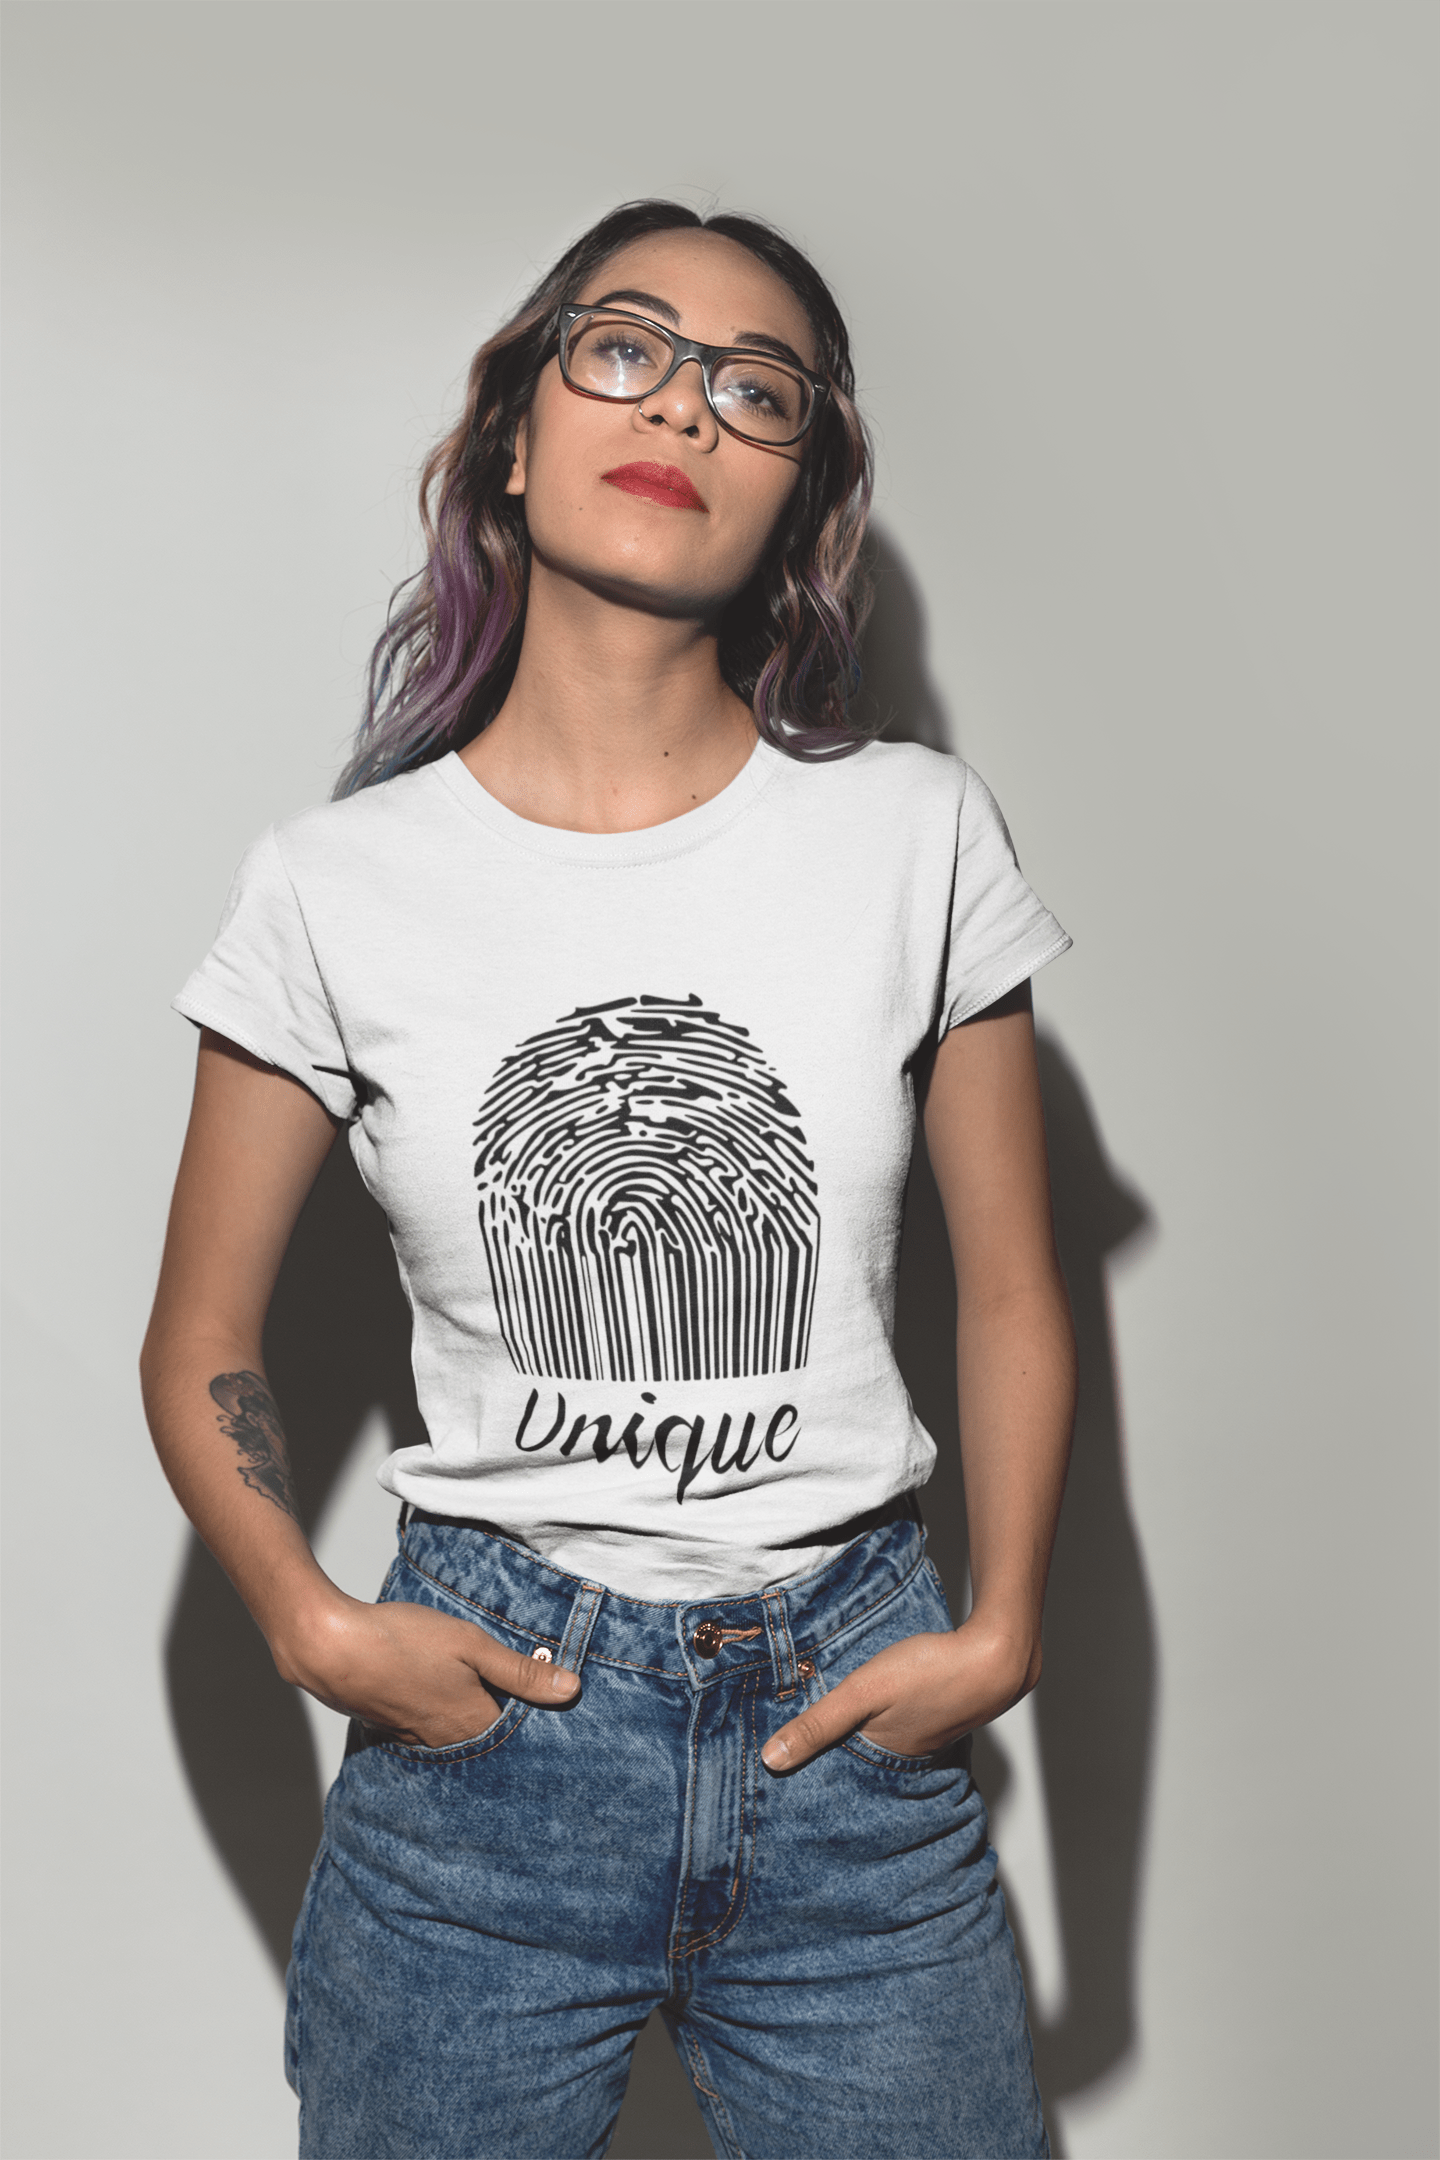 Unique Fingerprint, White, Women's Short Sleeve Round Neck T-shirt, gift t-shirt 00304